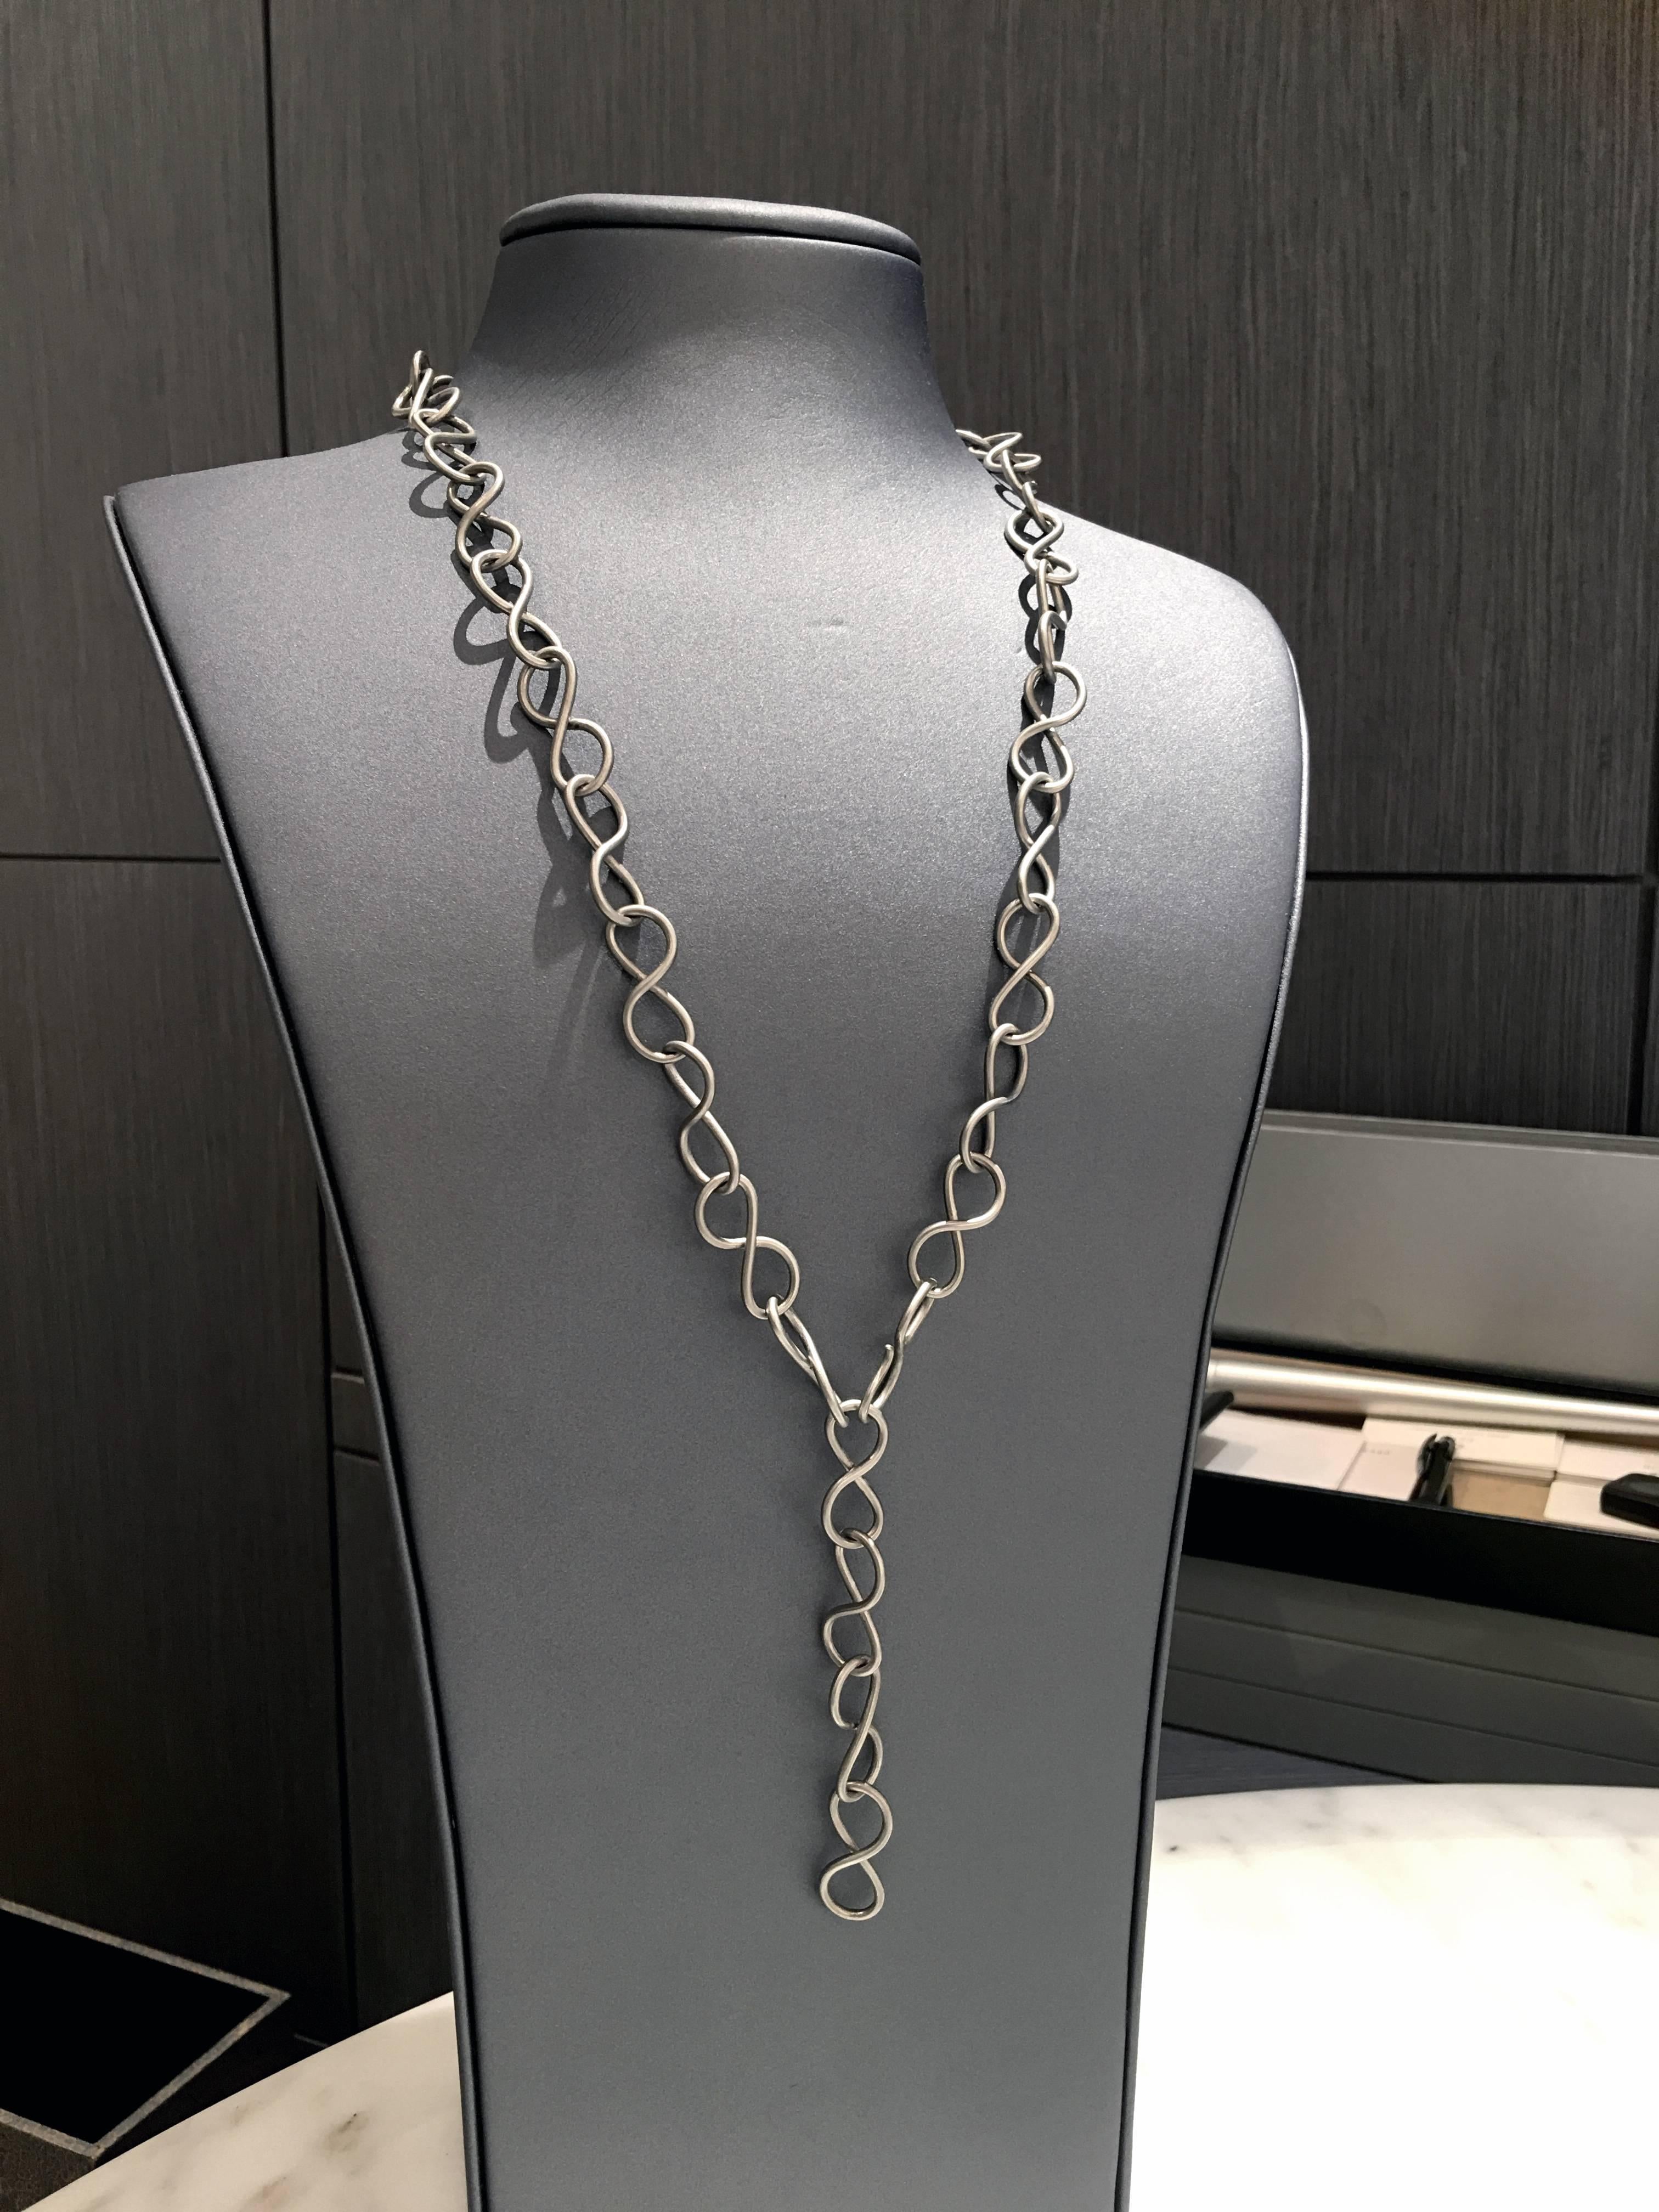 Artist Antonio Bernardo Matte Silver Infinity Links Chain Long Necklace